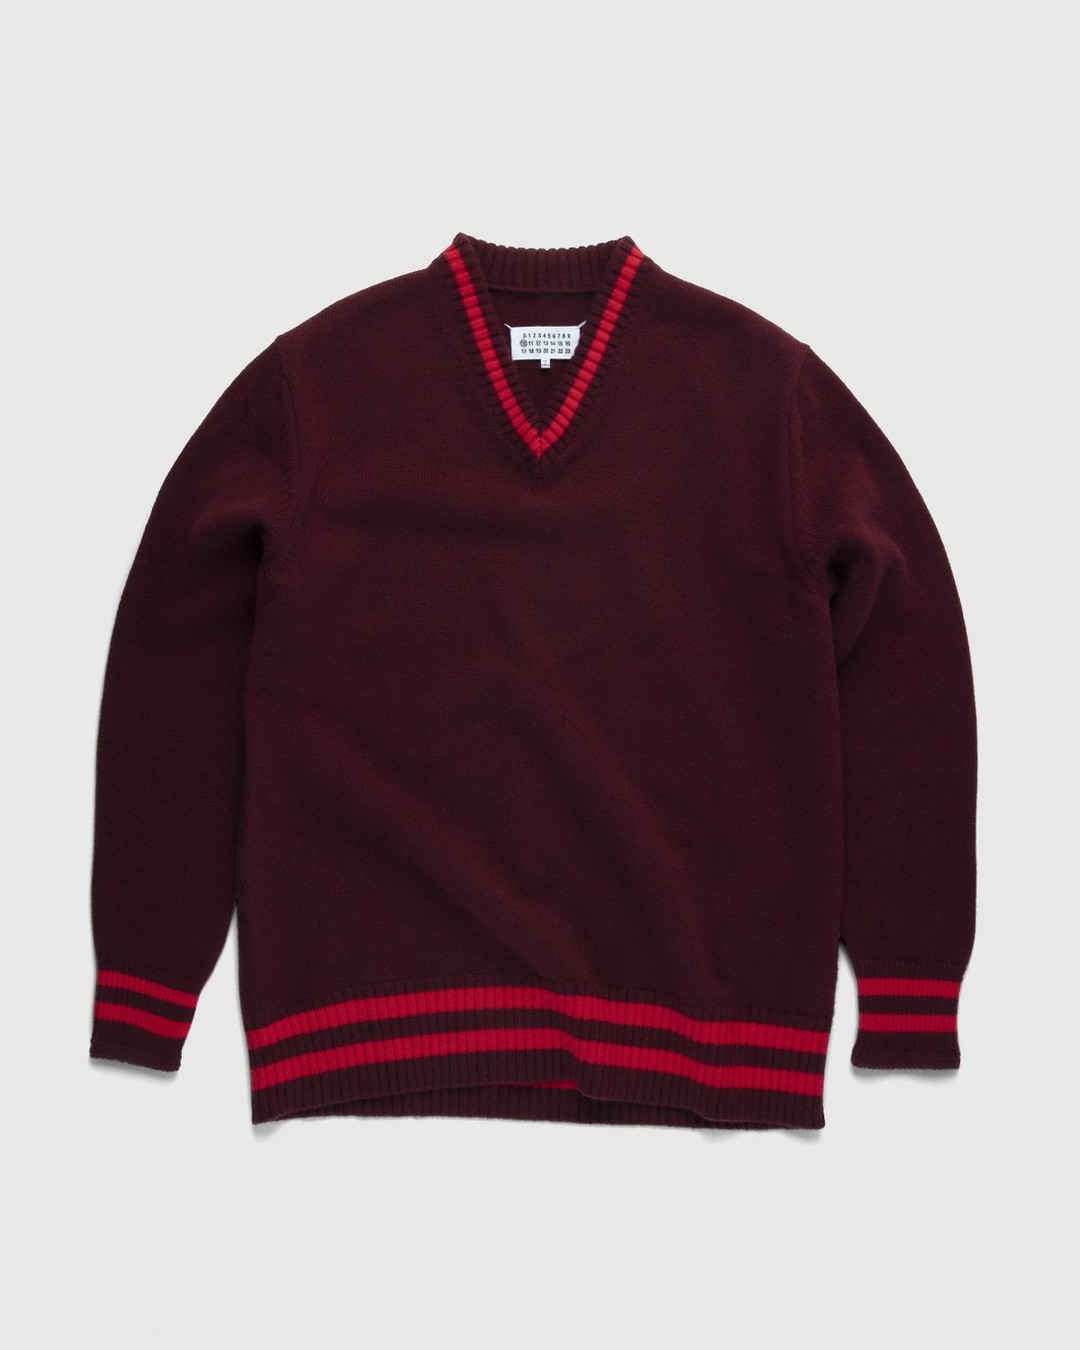 Maison Margiela – Oversized V Neck Knit Burgundy - Knitwear - Red - Image 1